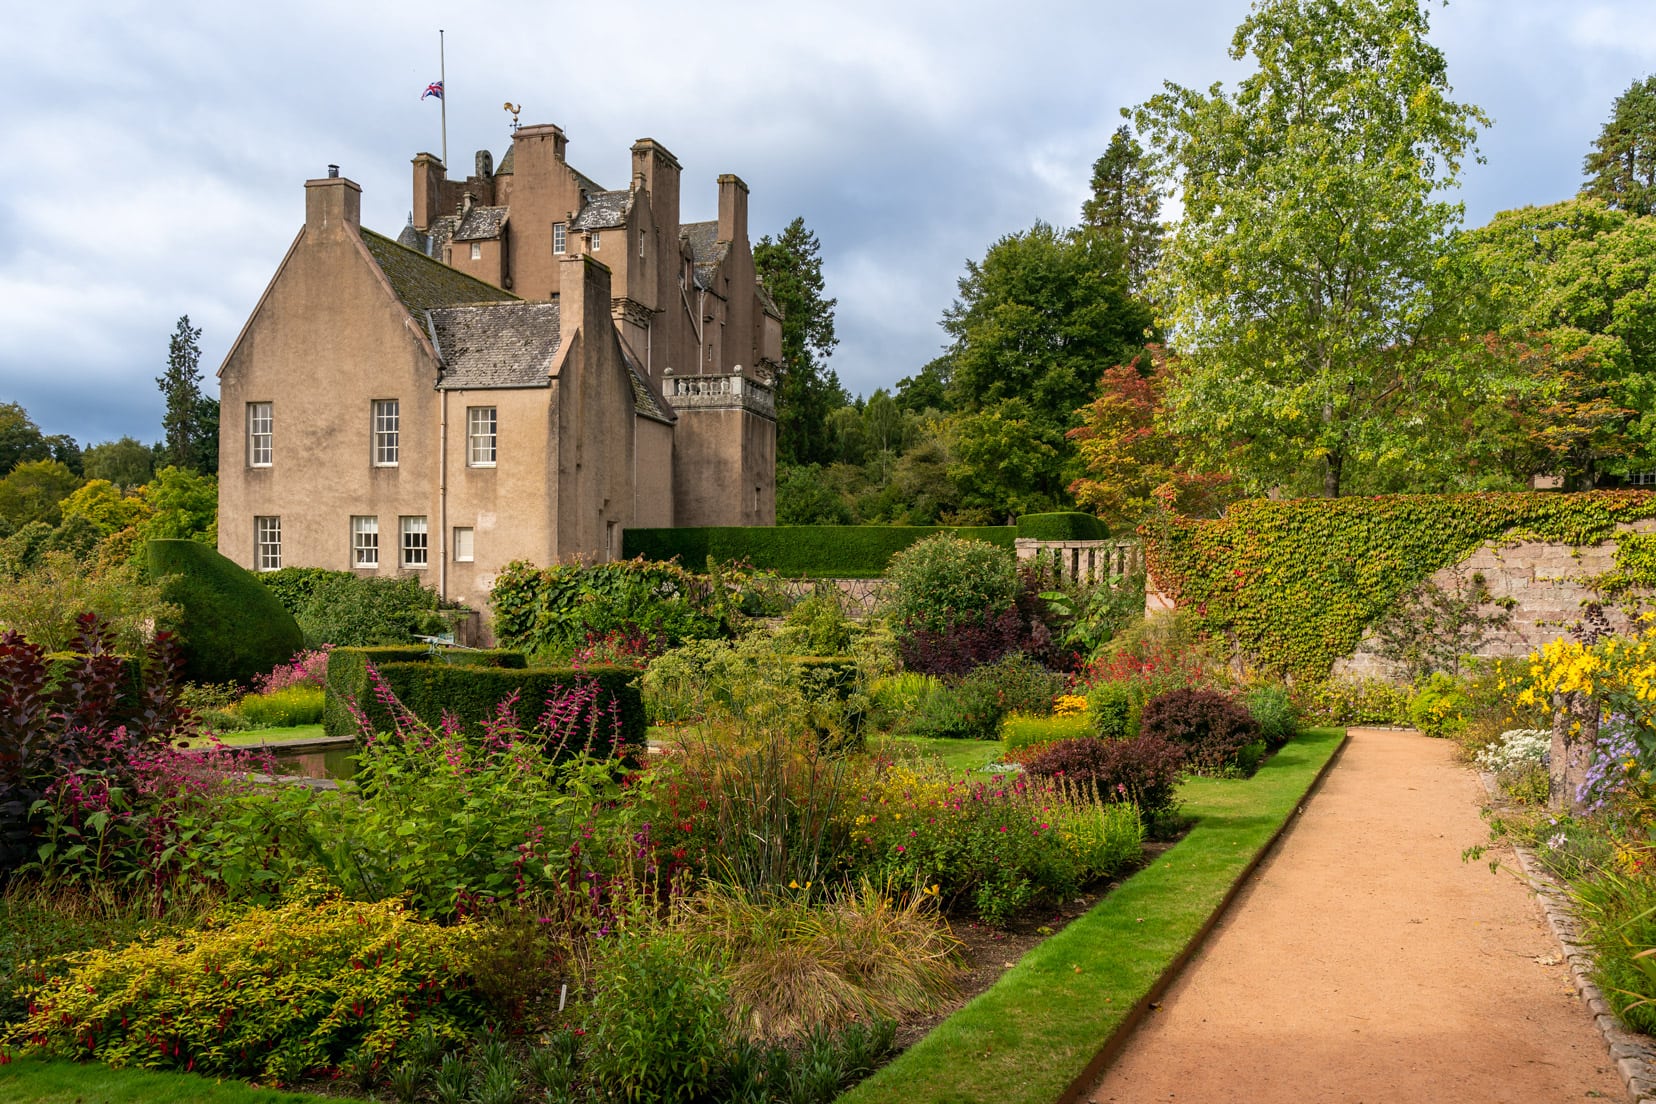 Aberdeenshire castle, Crathes-Castle-Gardens seen from the gardens